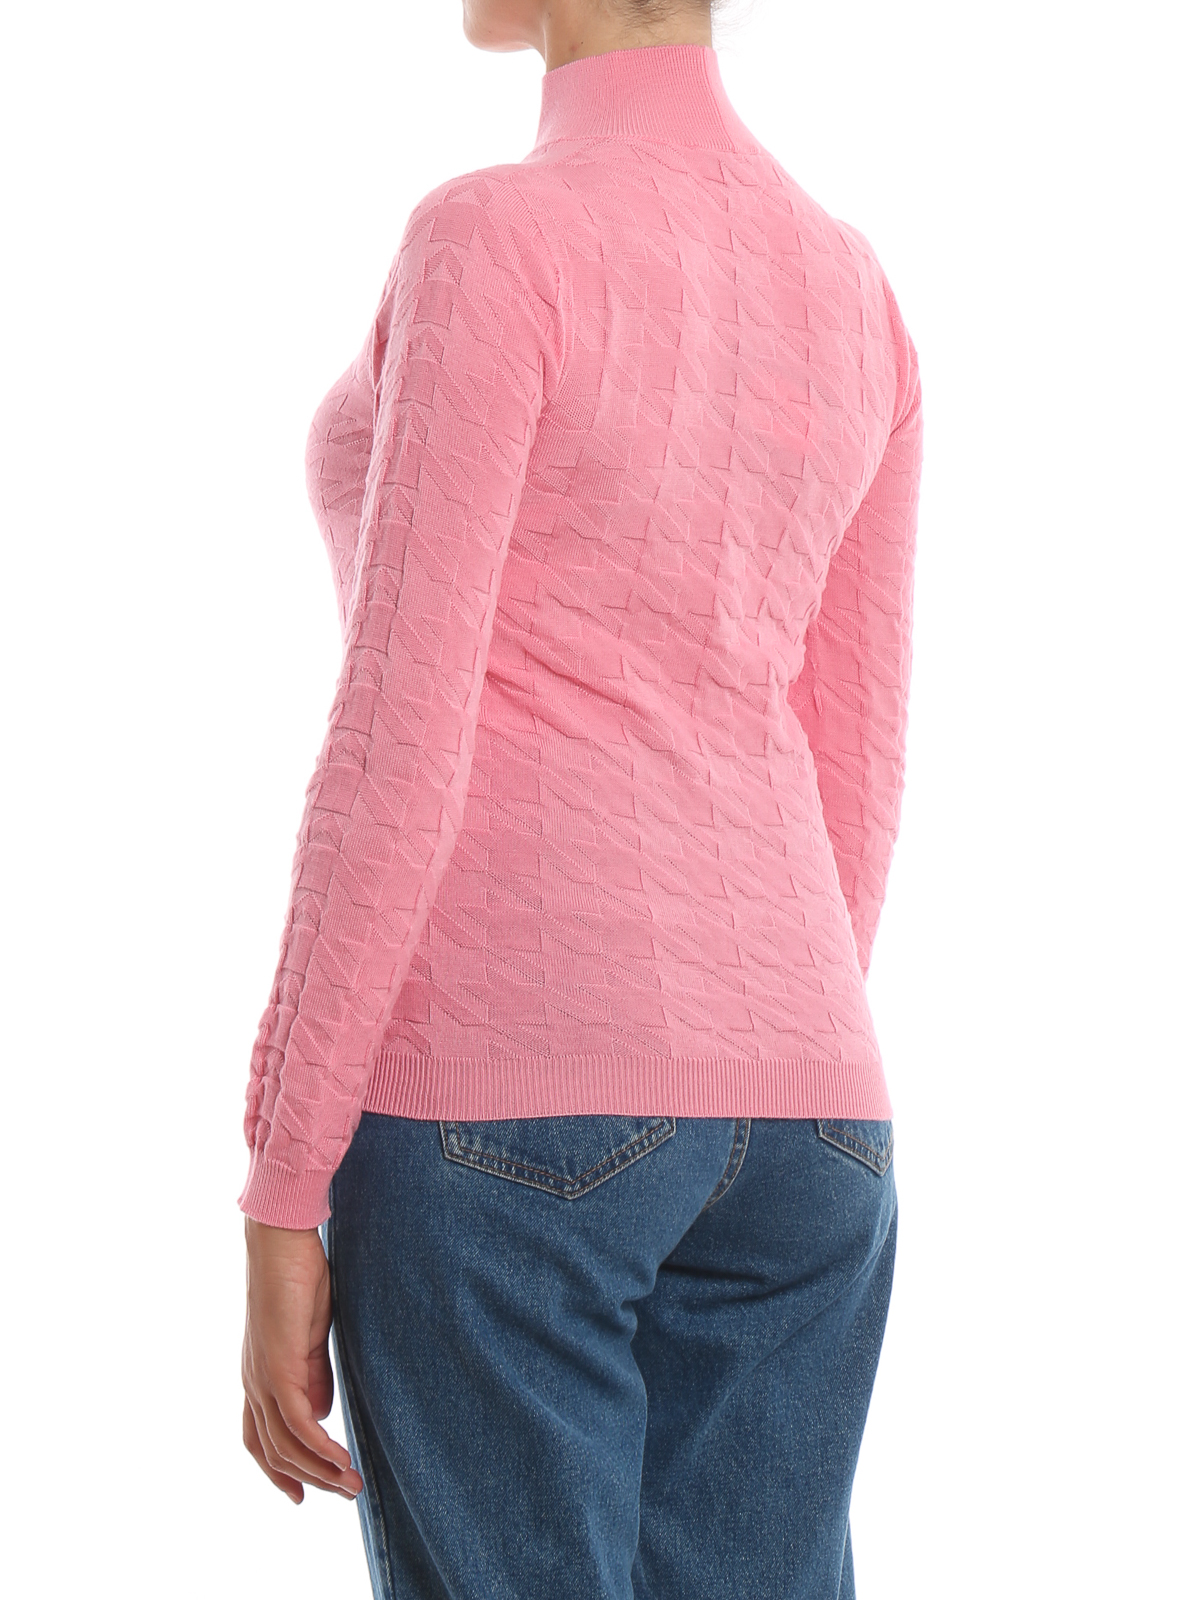 Blumarine Wool Turtleneck in Pink Womens Clothing Jumpers and knitwear Turtlenecks 